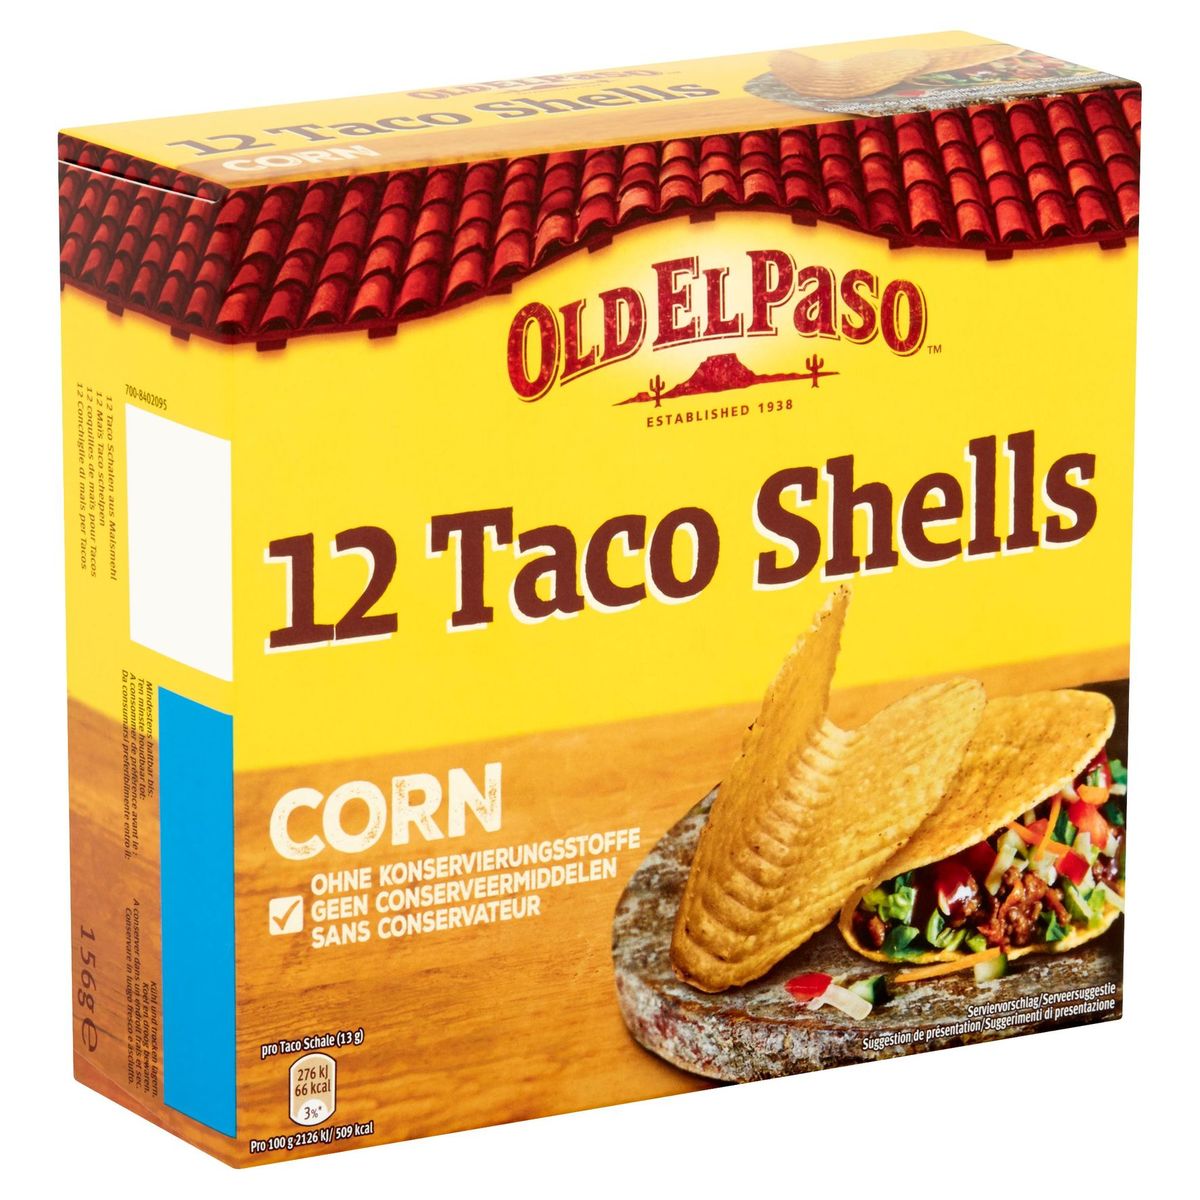 Old El Paso 12 Taco Shells Corn 156 g